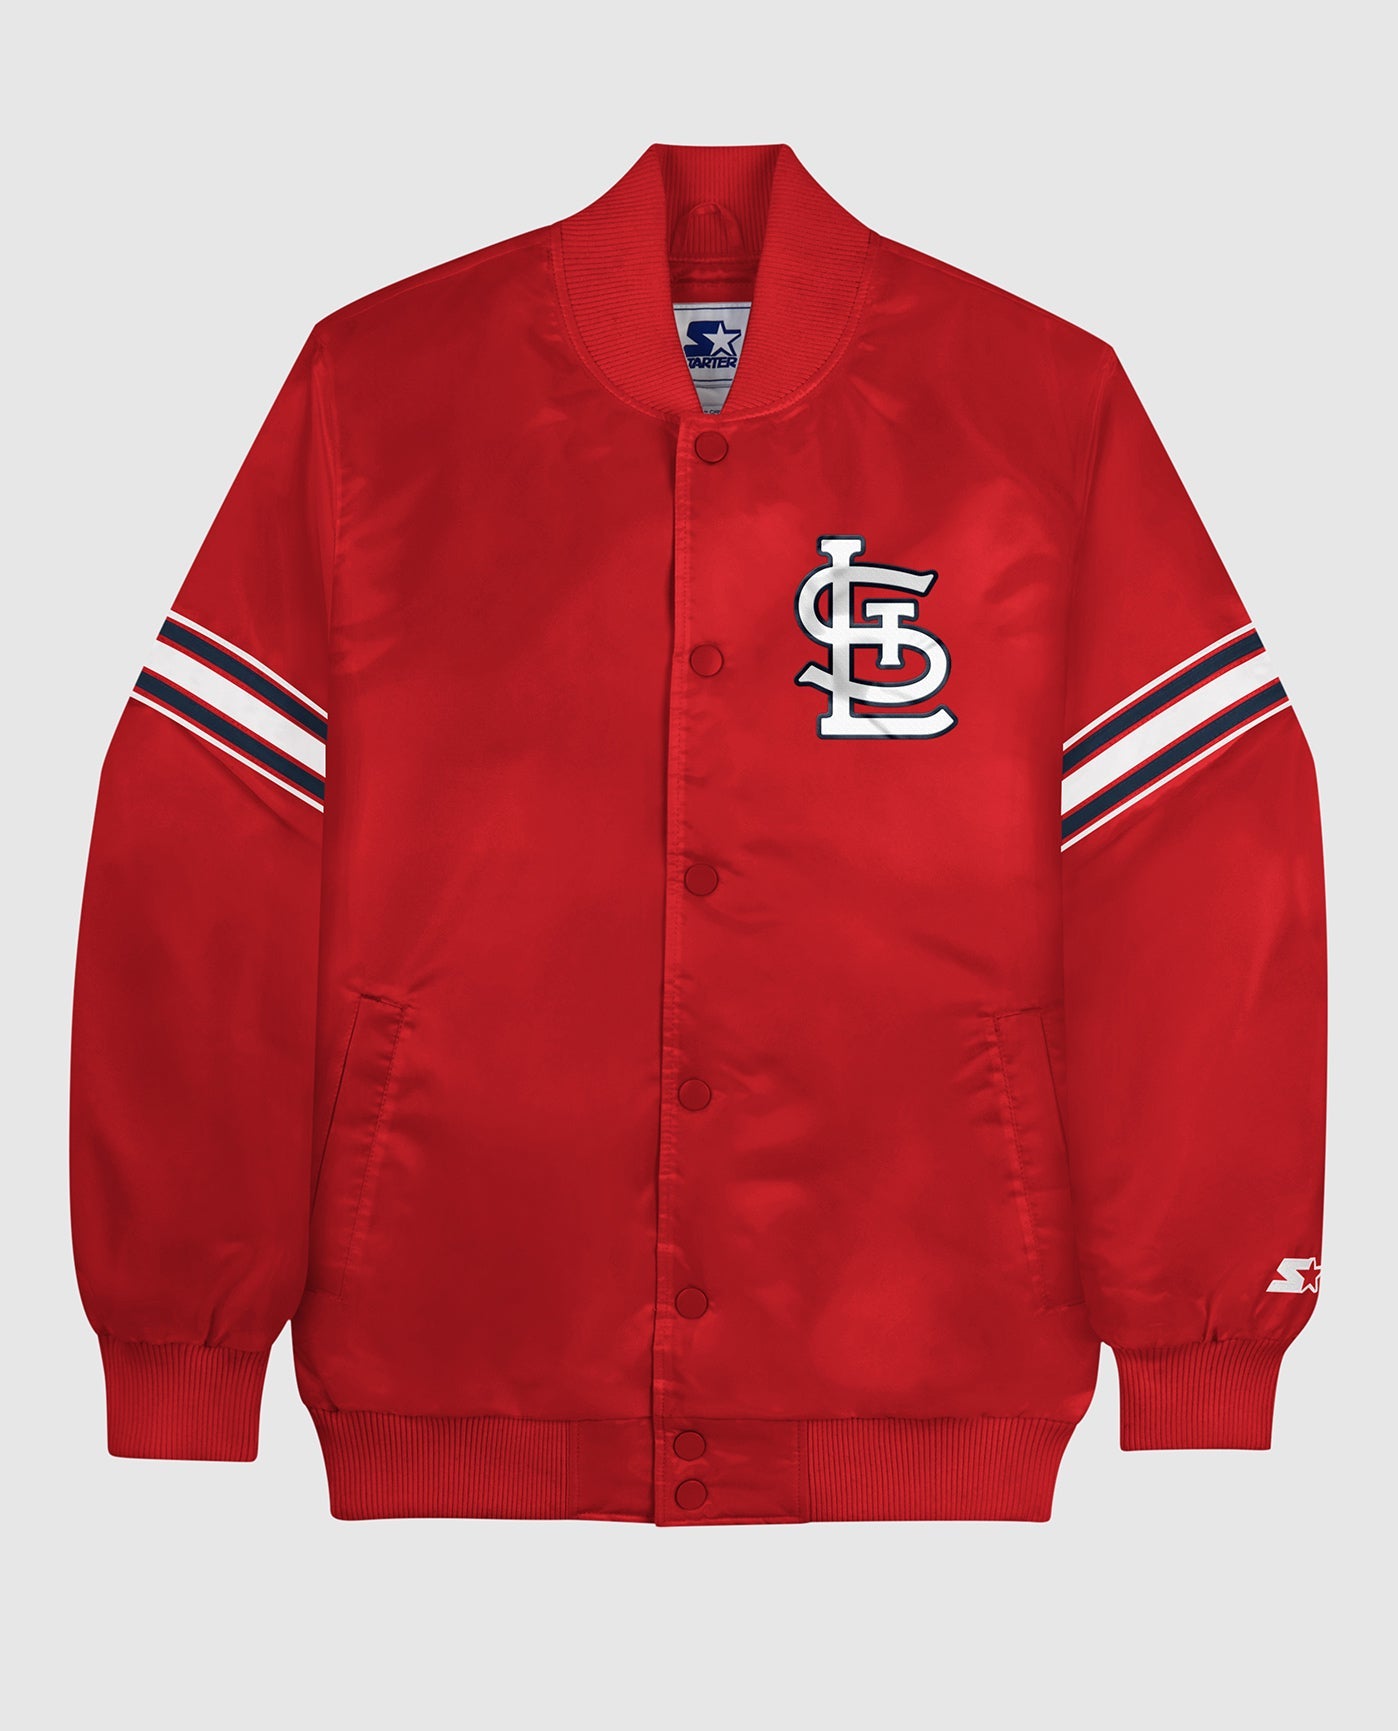 Ladies St. Louis Cardinals Jacket, Cardinals Ladies Jackets, MLB